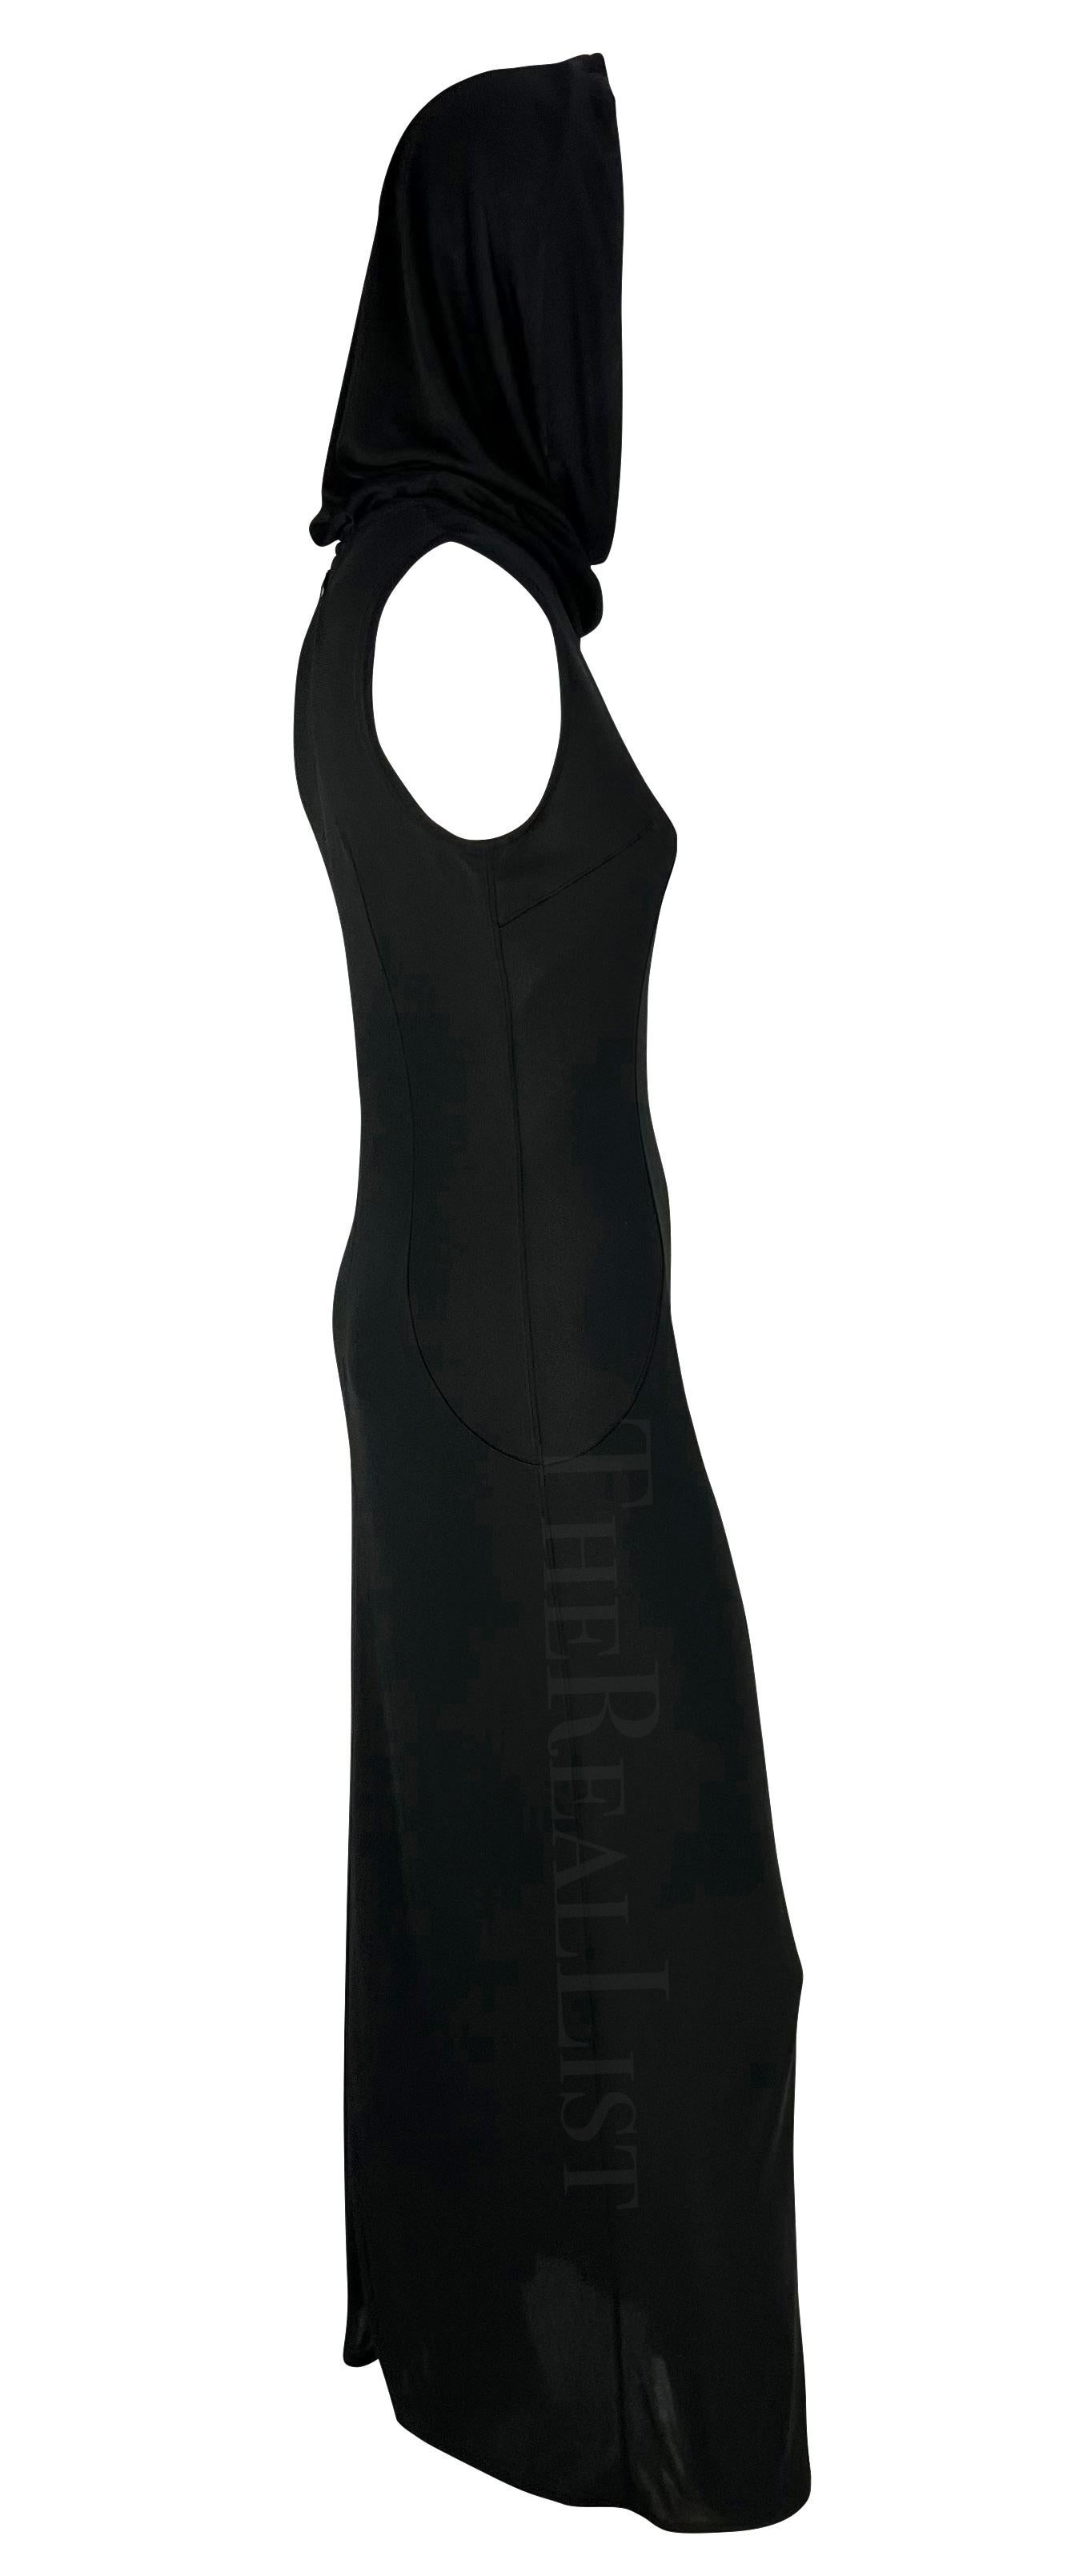 S/S 1996 Dolce & Gabbana Runway Hooded Stretch Black High Slit Dress For Sale 4